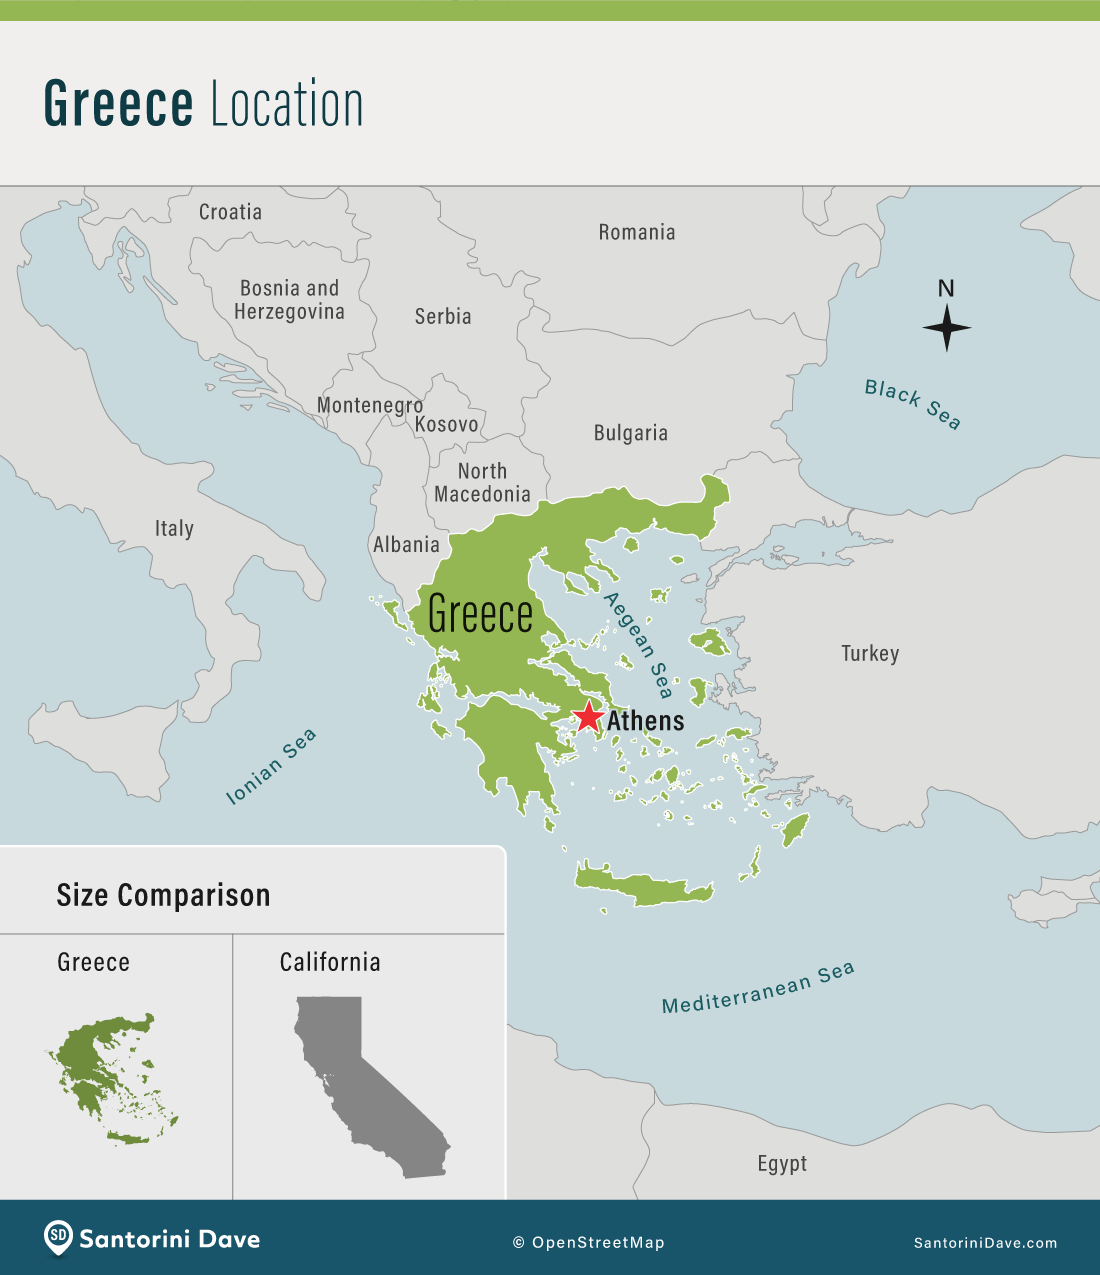 Location of Greece.